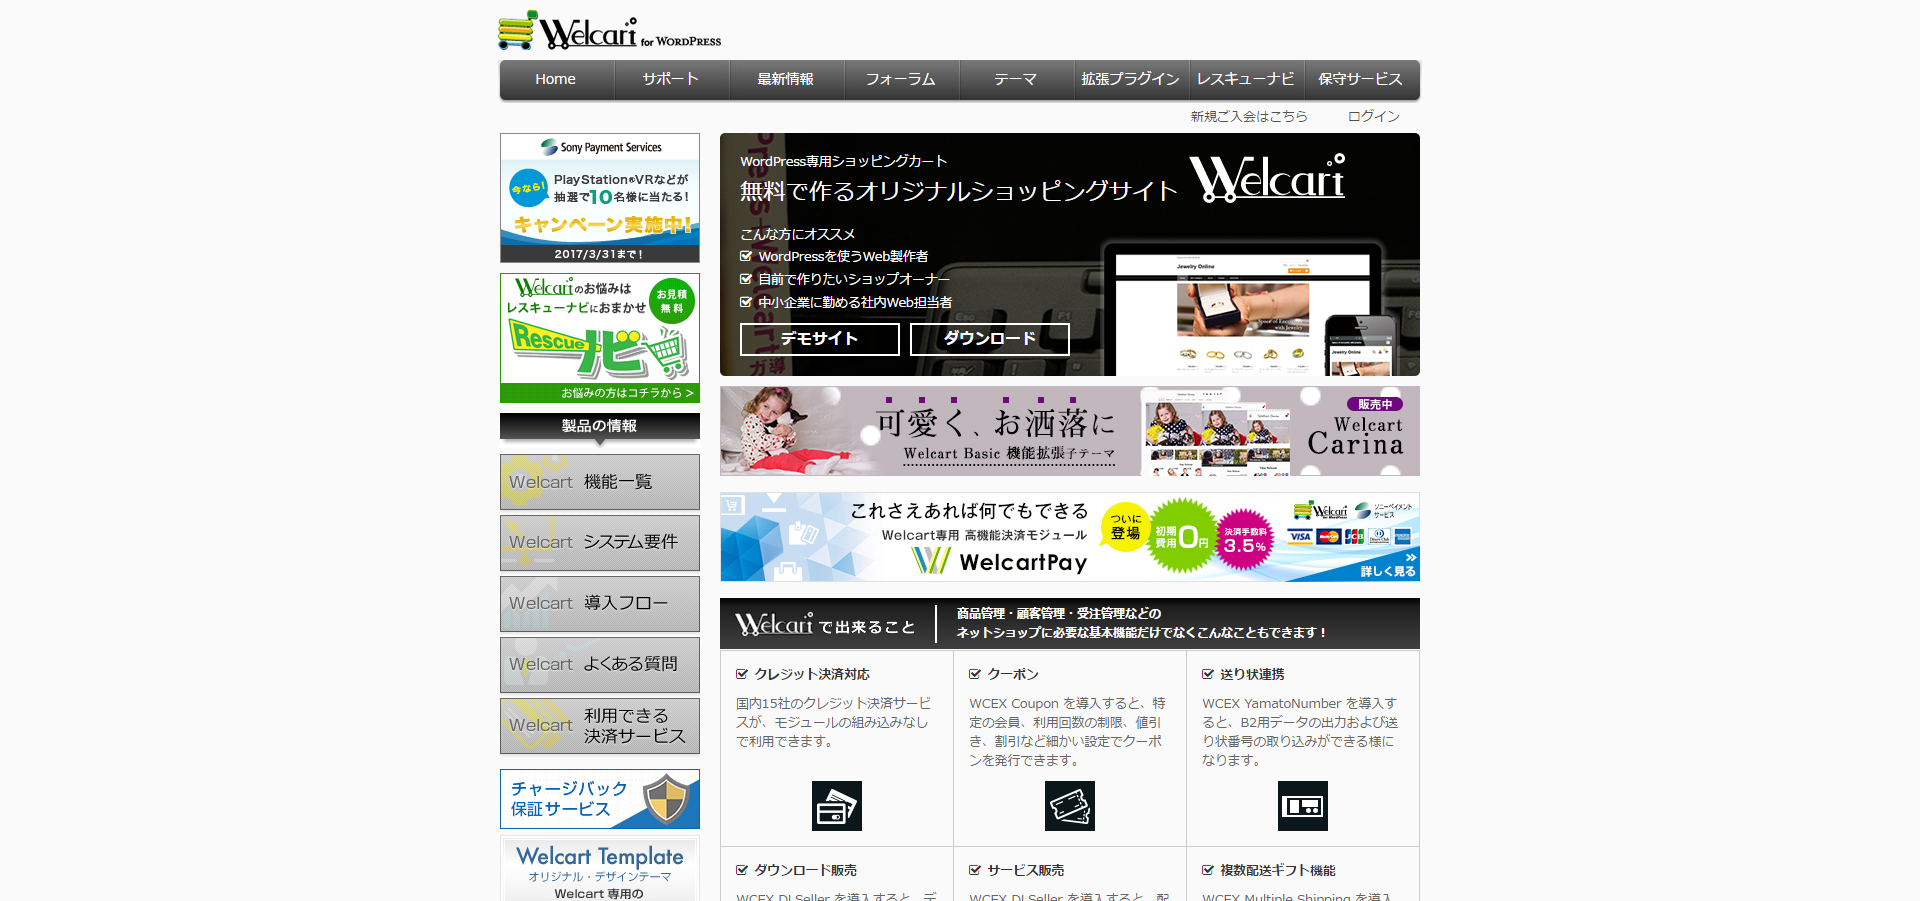 「Welcart」の公式サイト